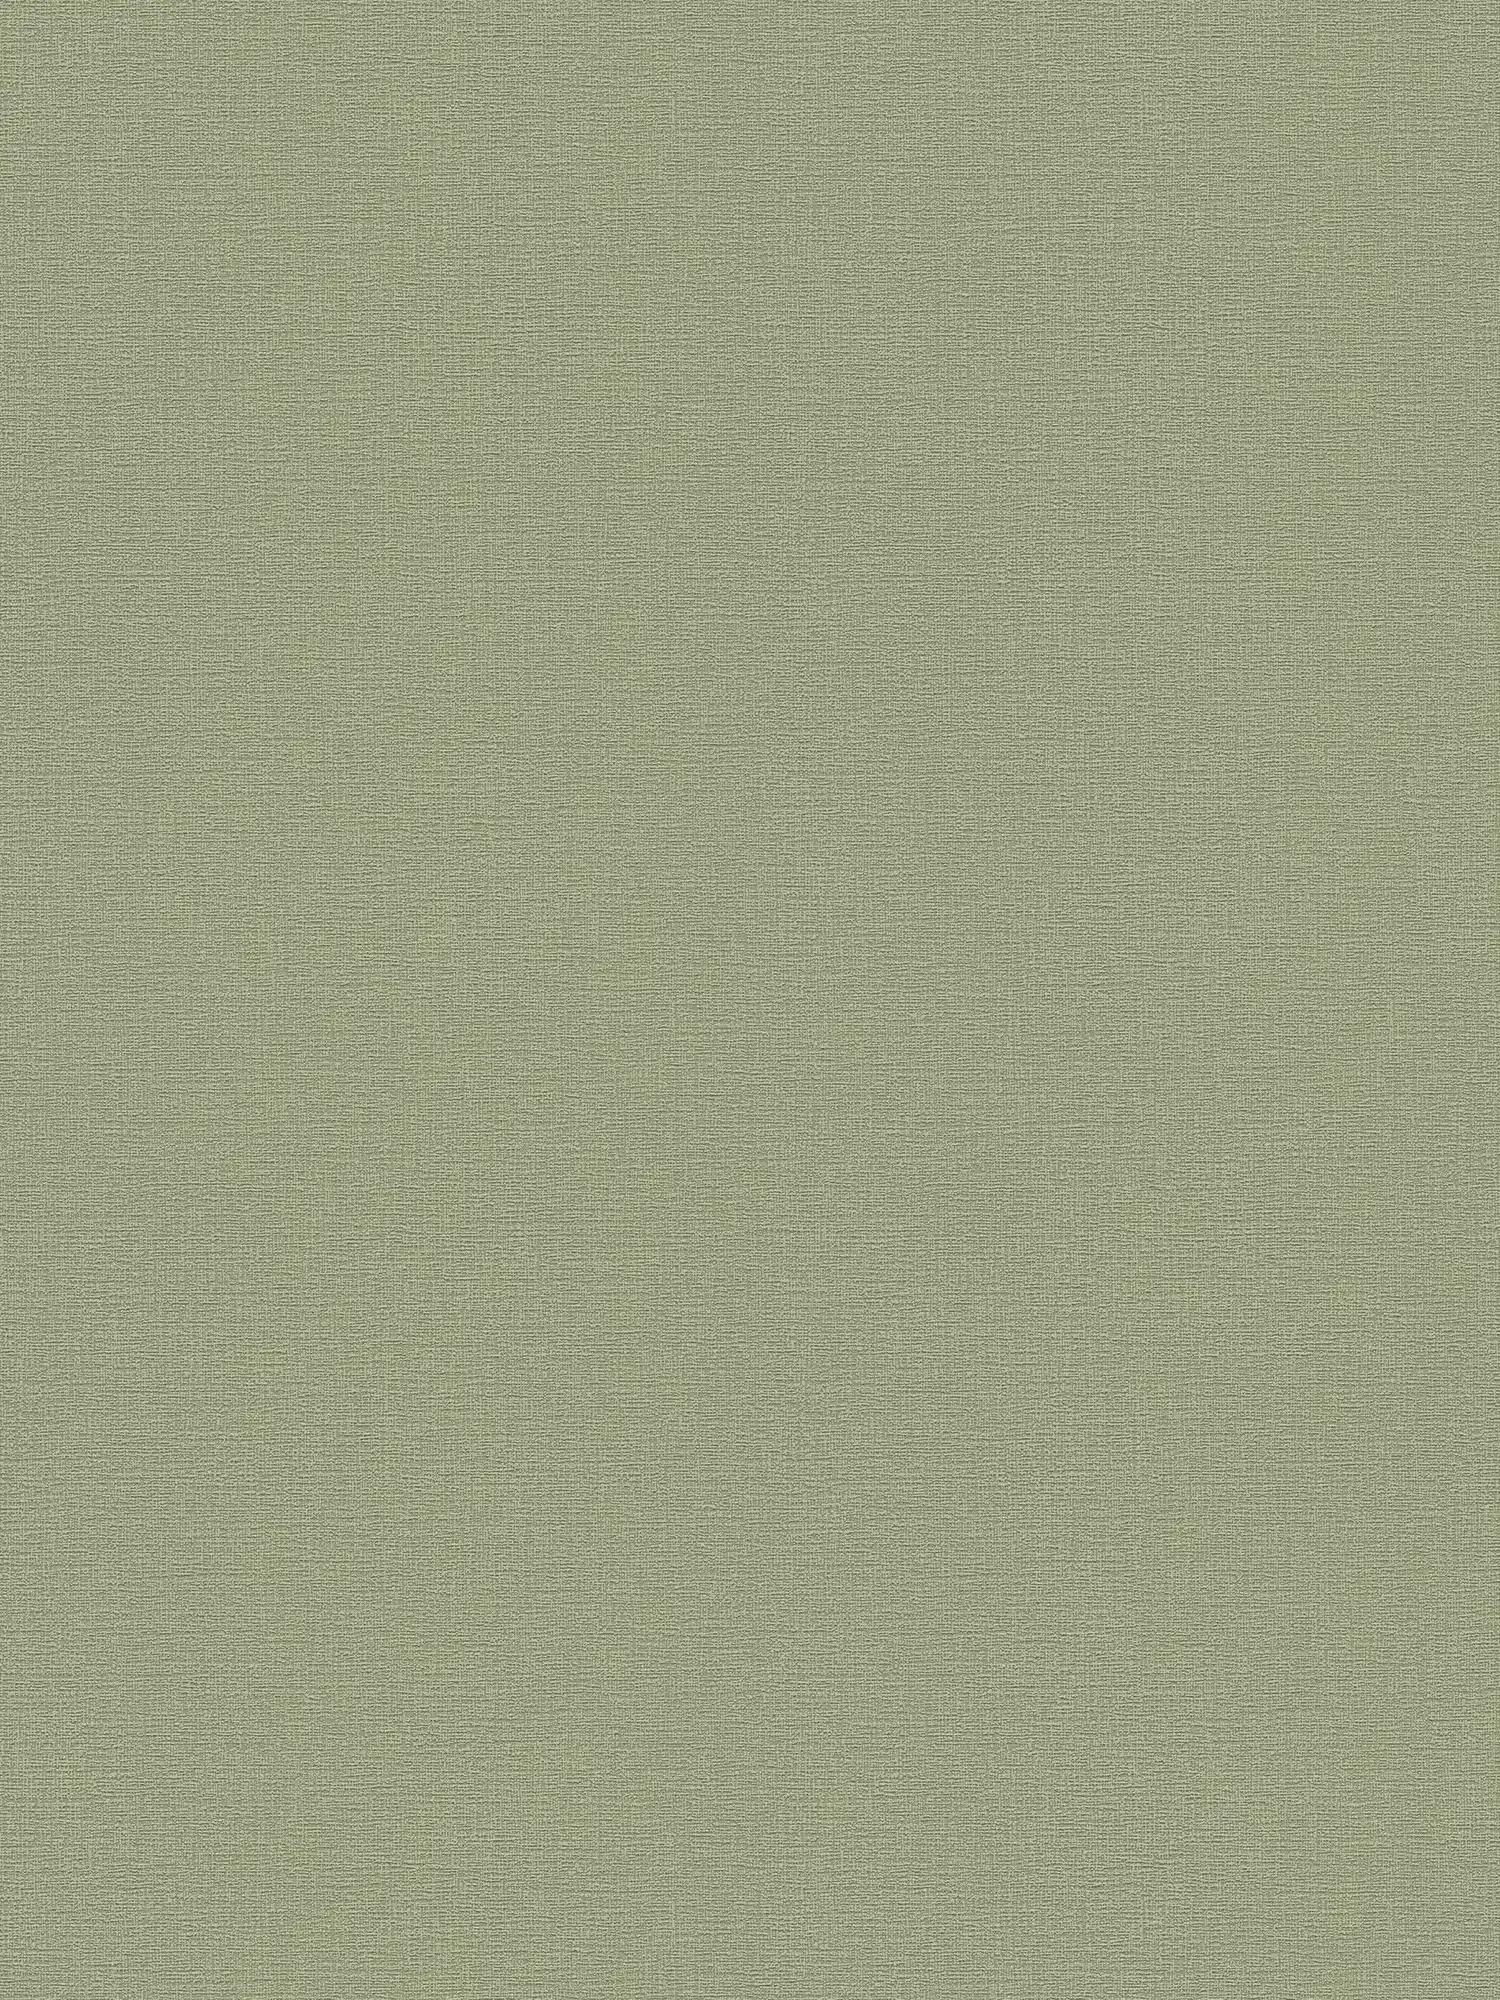 Khaki wallpaper eucalyptus green with texture pattern
